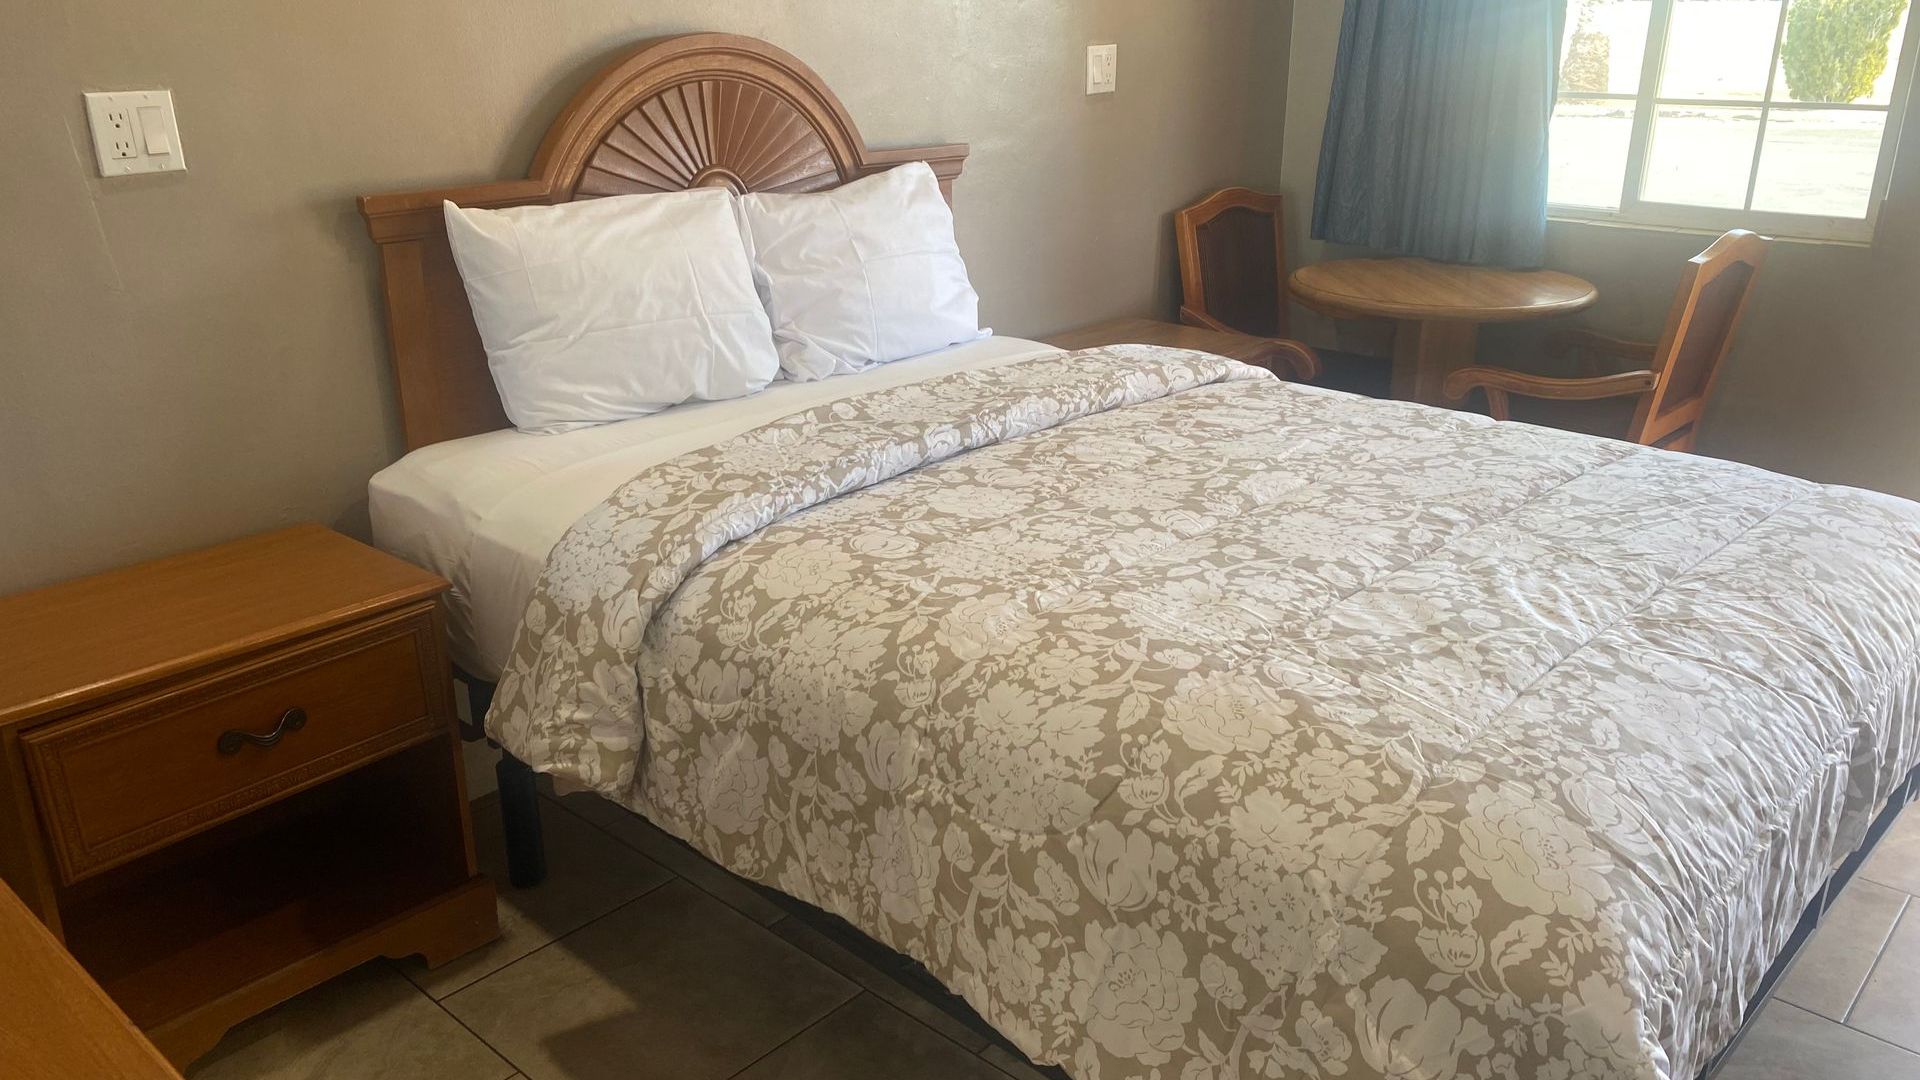 Motel room bed